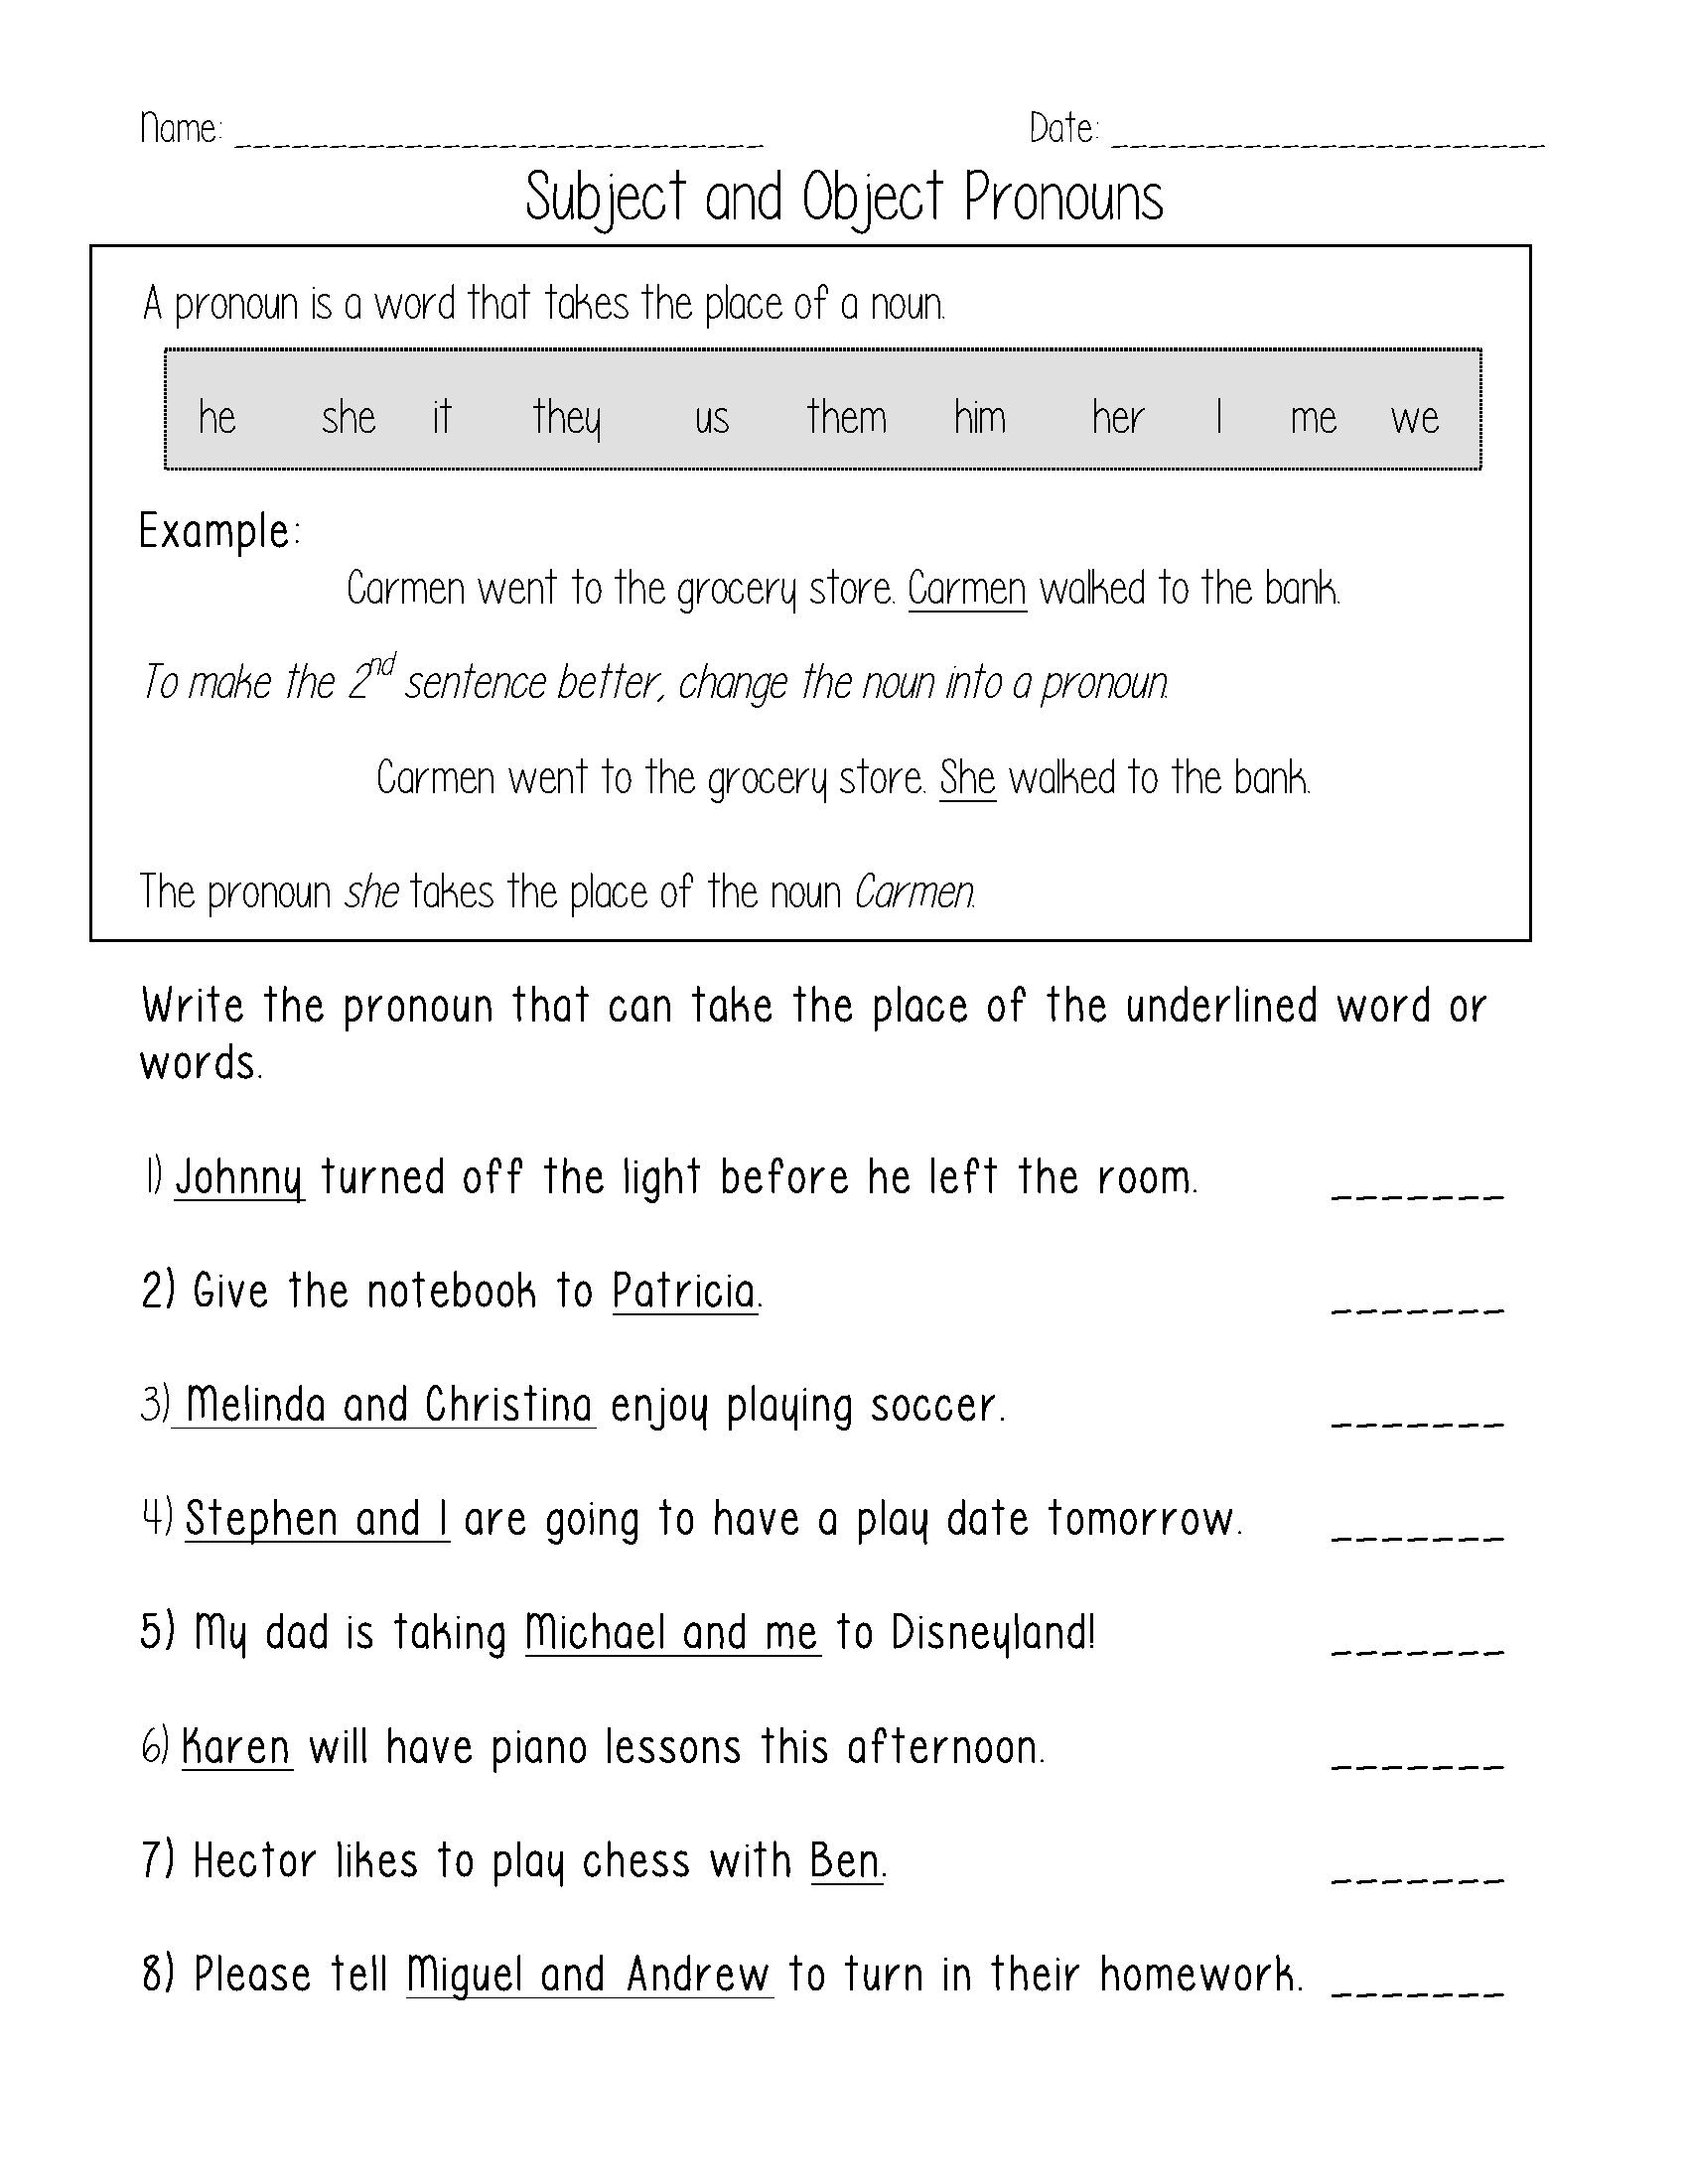 Subject Object Pronouns Worksheet Image